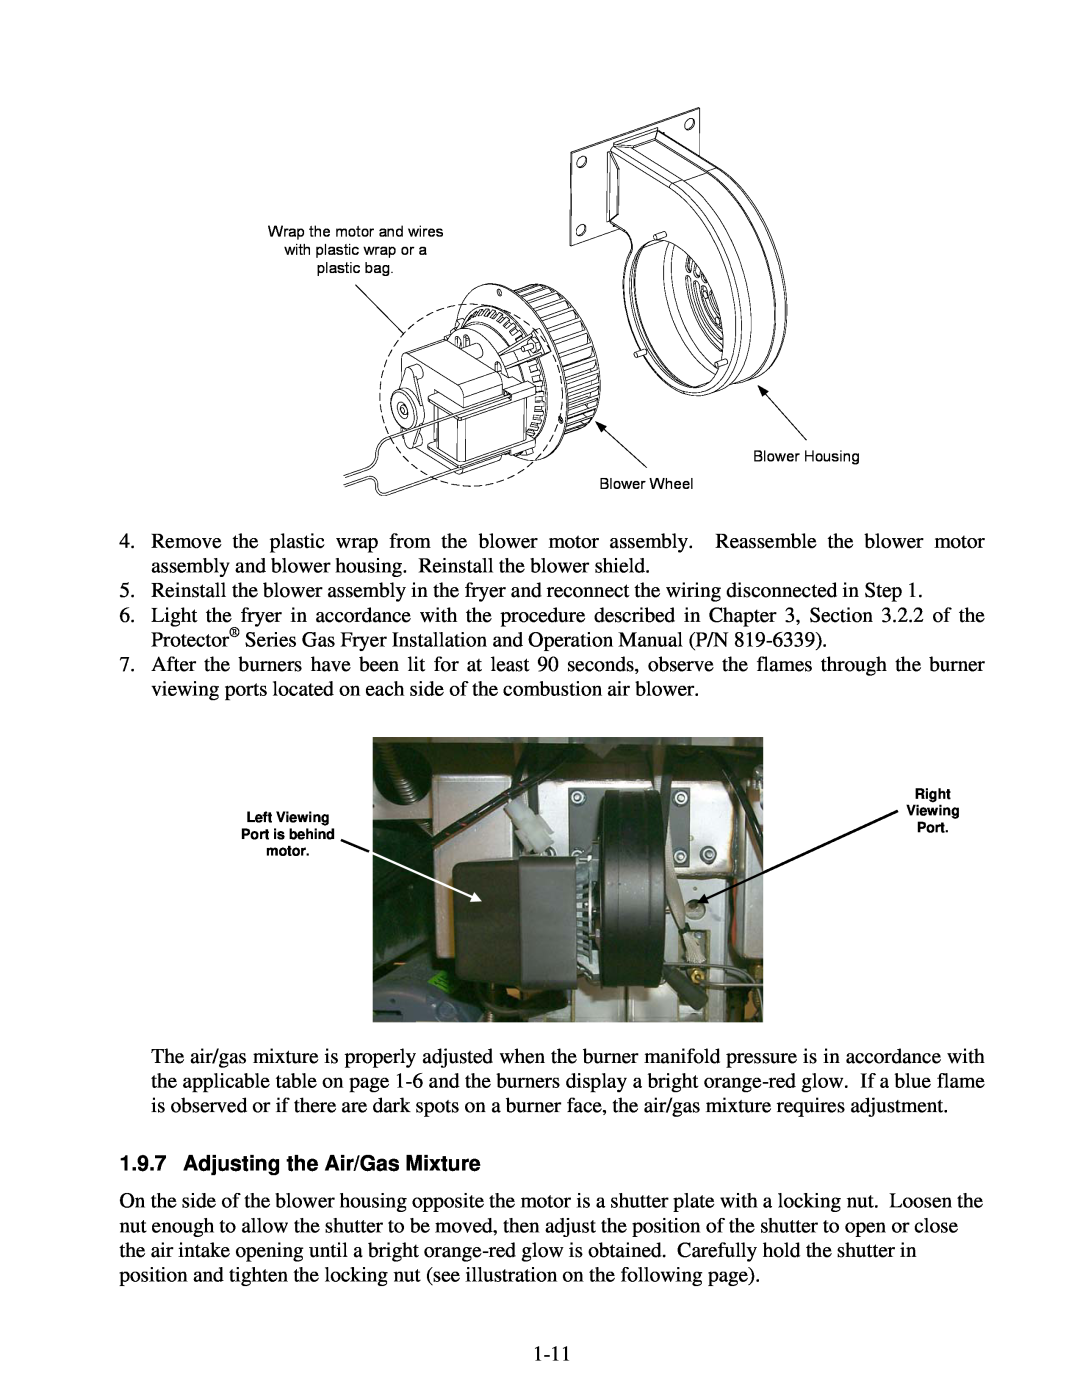 Frymaster 8196345 manual Adjusting the Air/Gas Mixture 